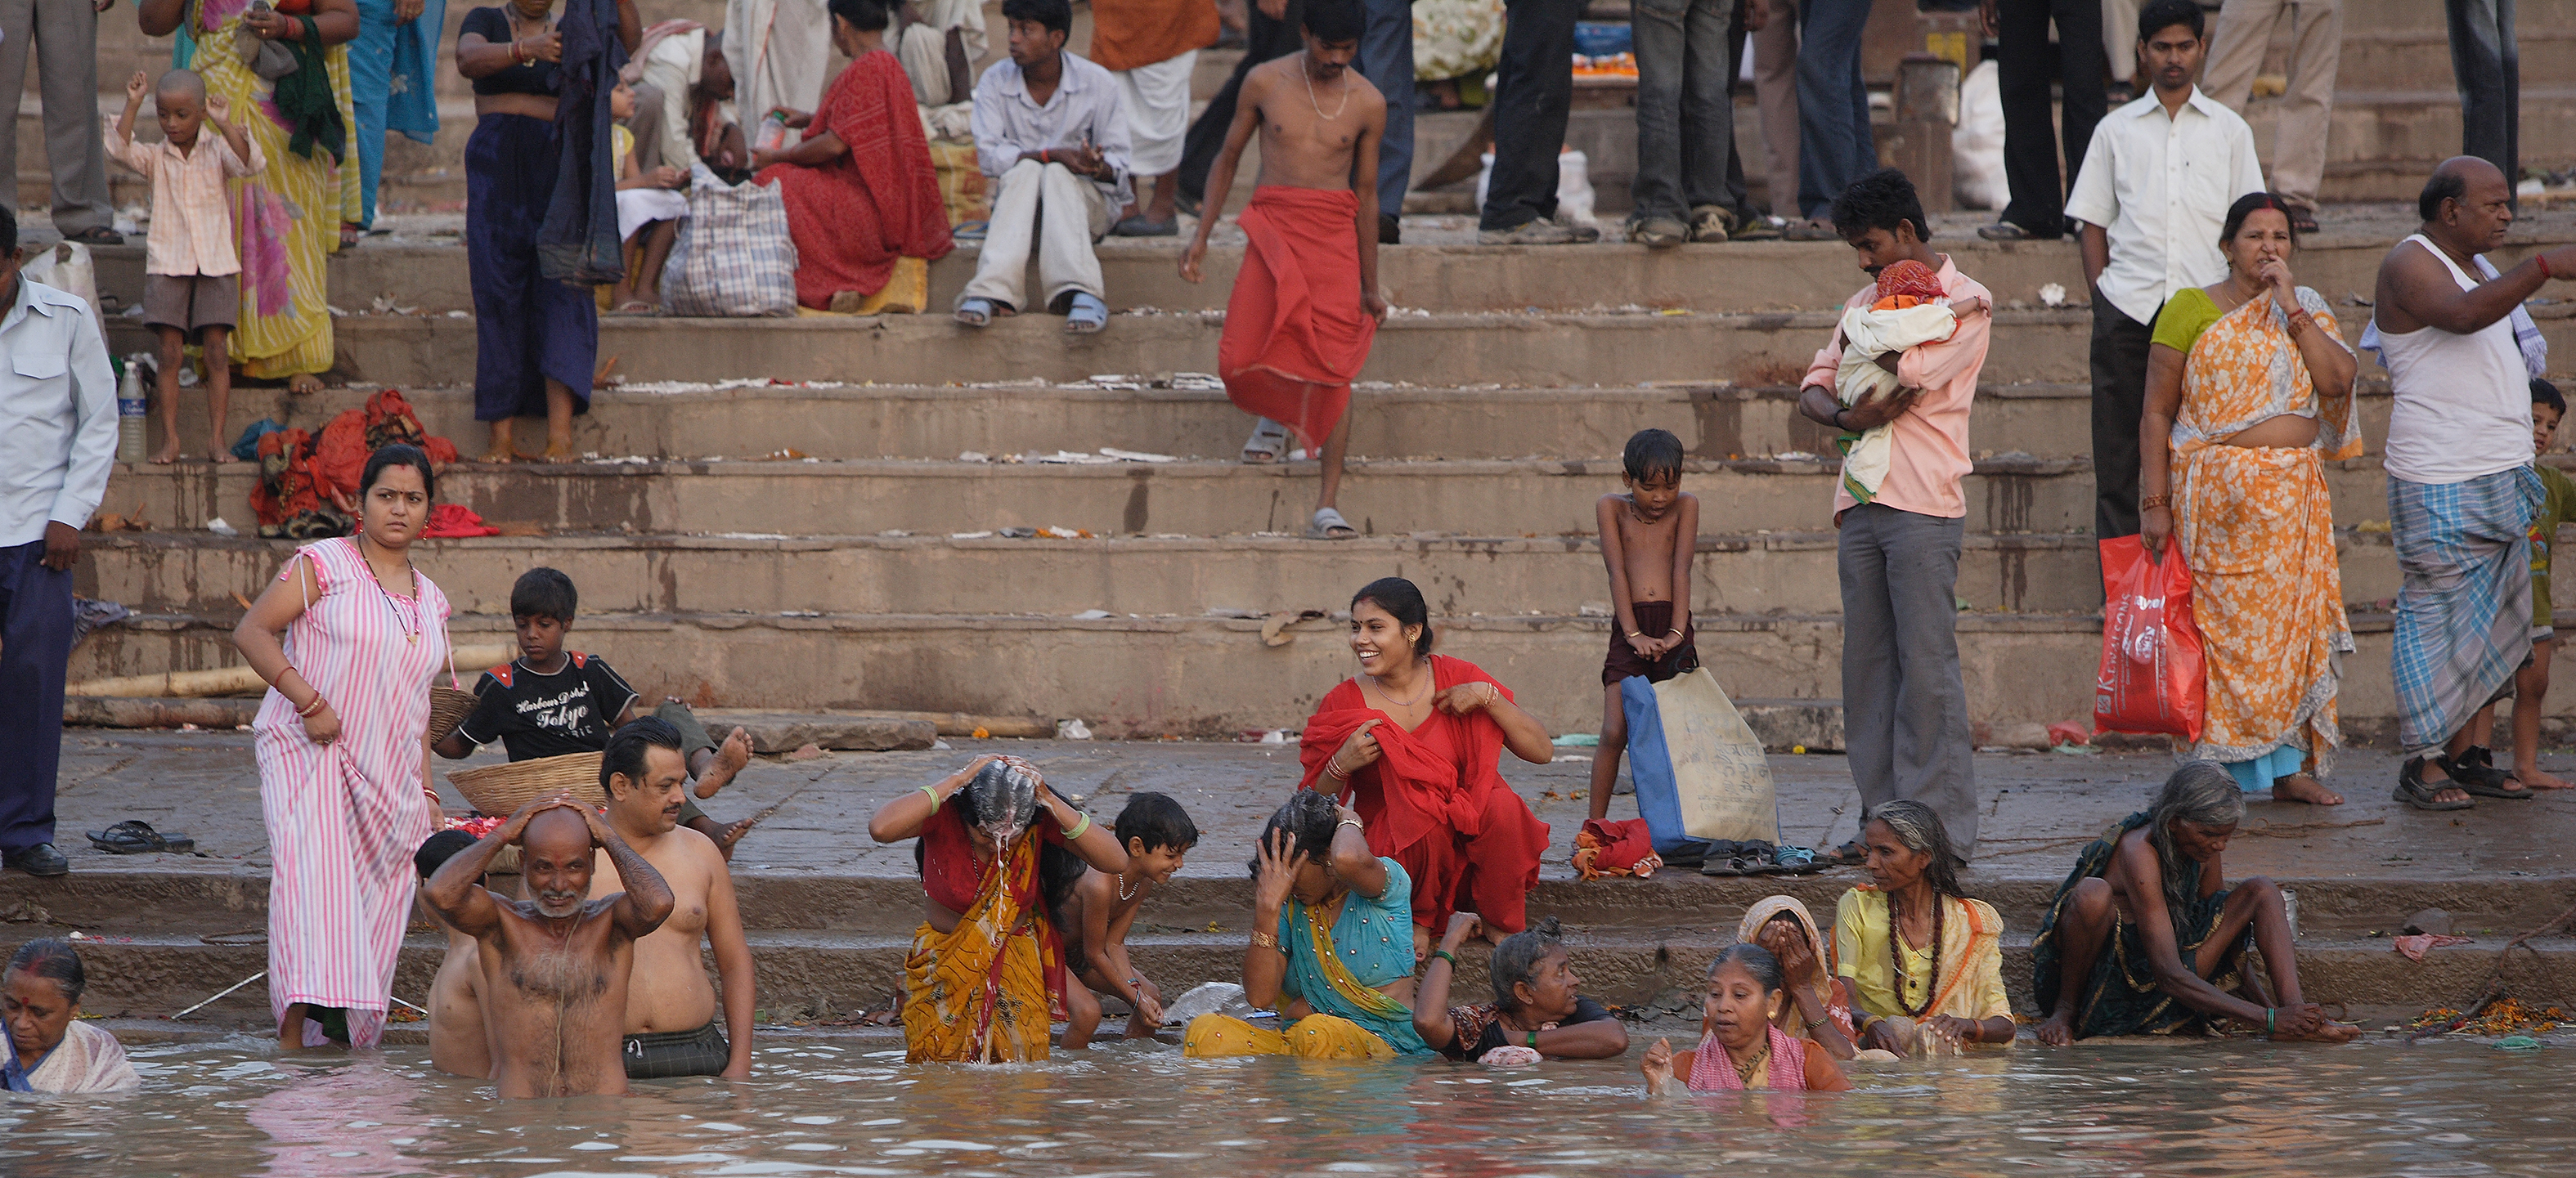 Indians-bathing-in-the-Ganges-River-at-Varanasi-India-web.jpg